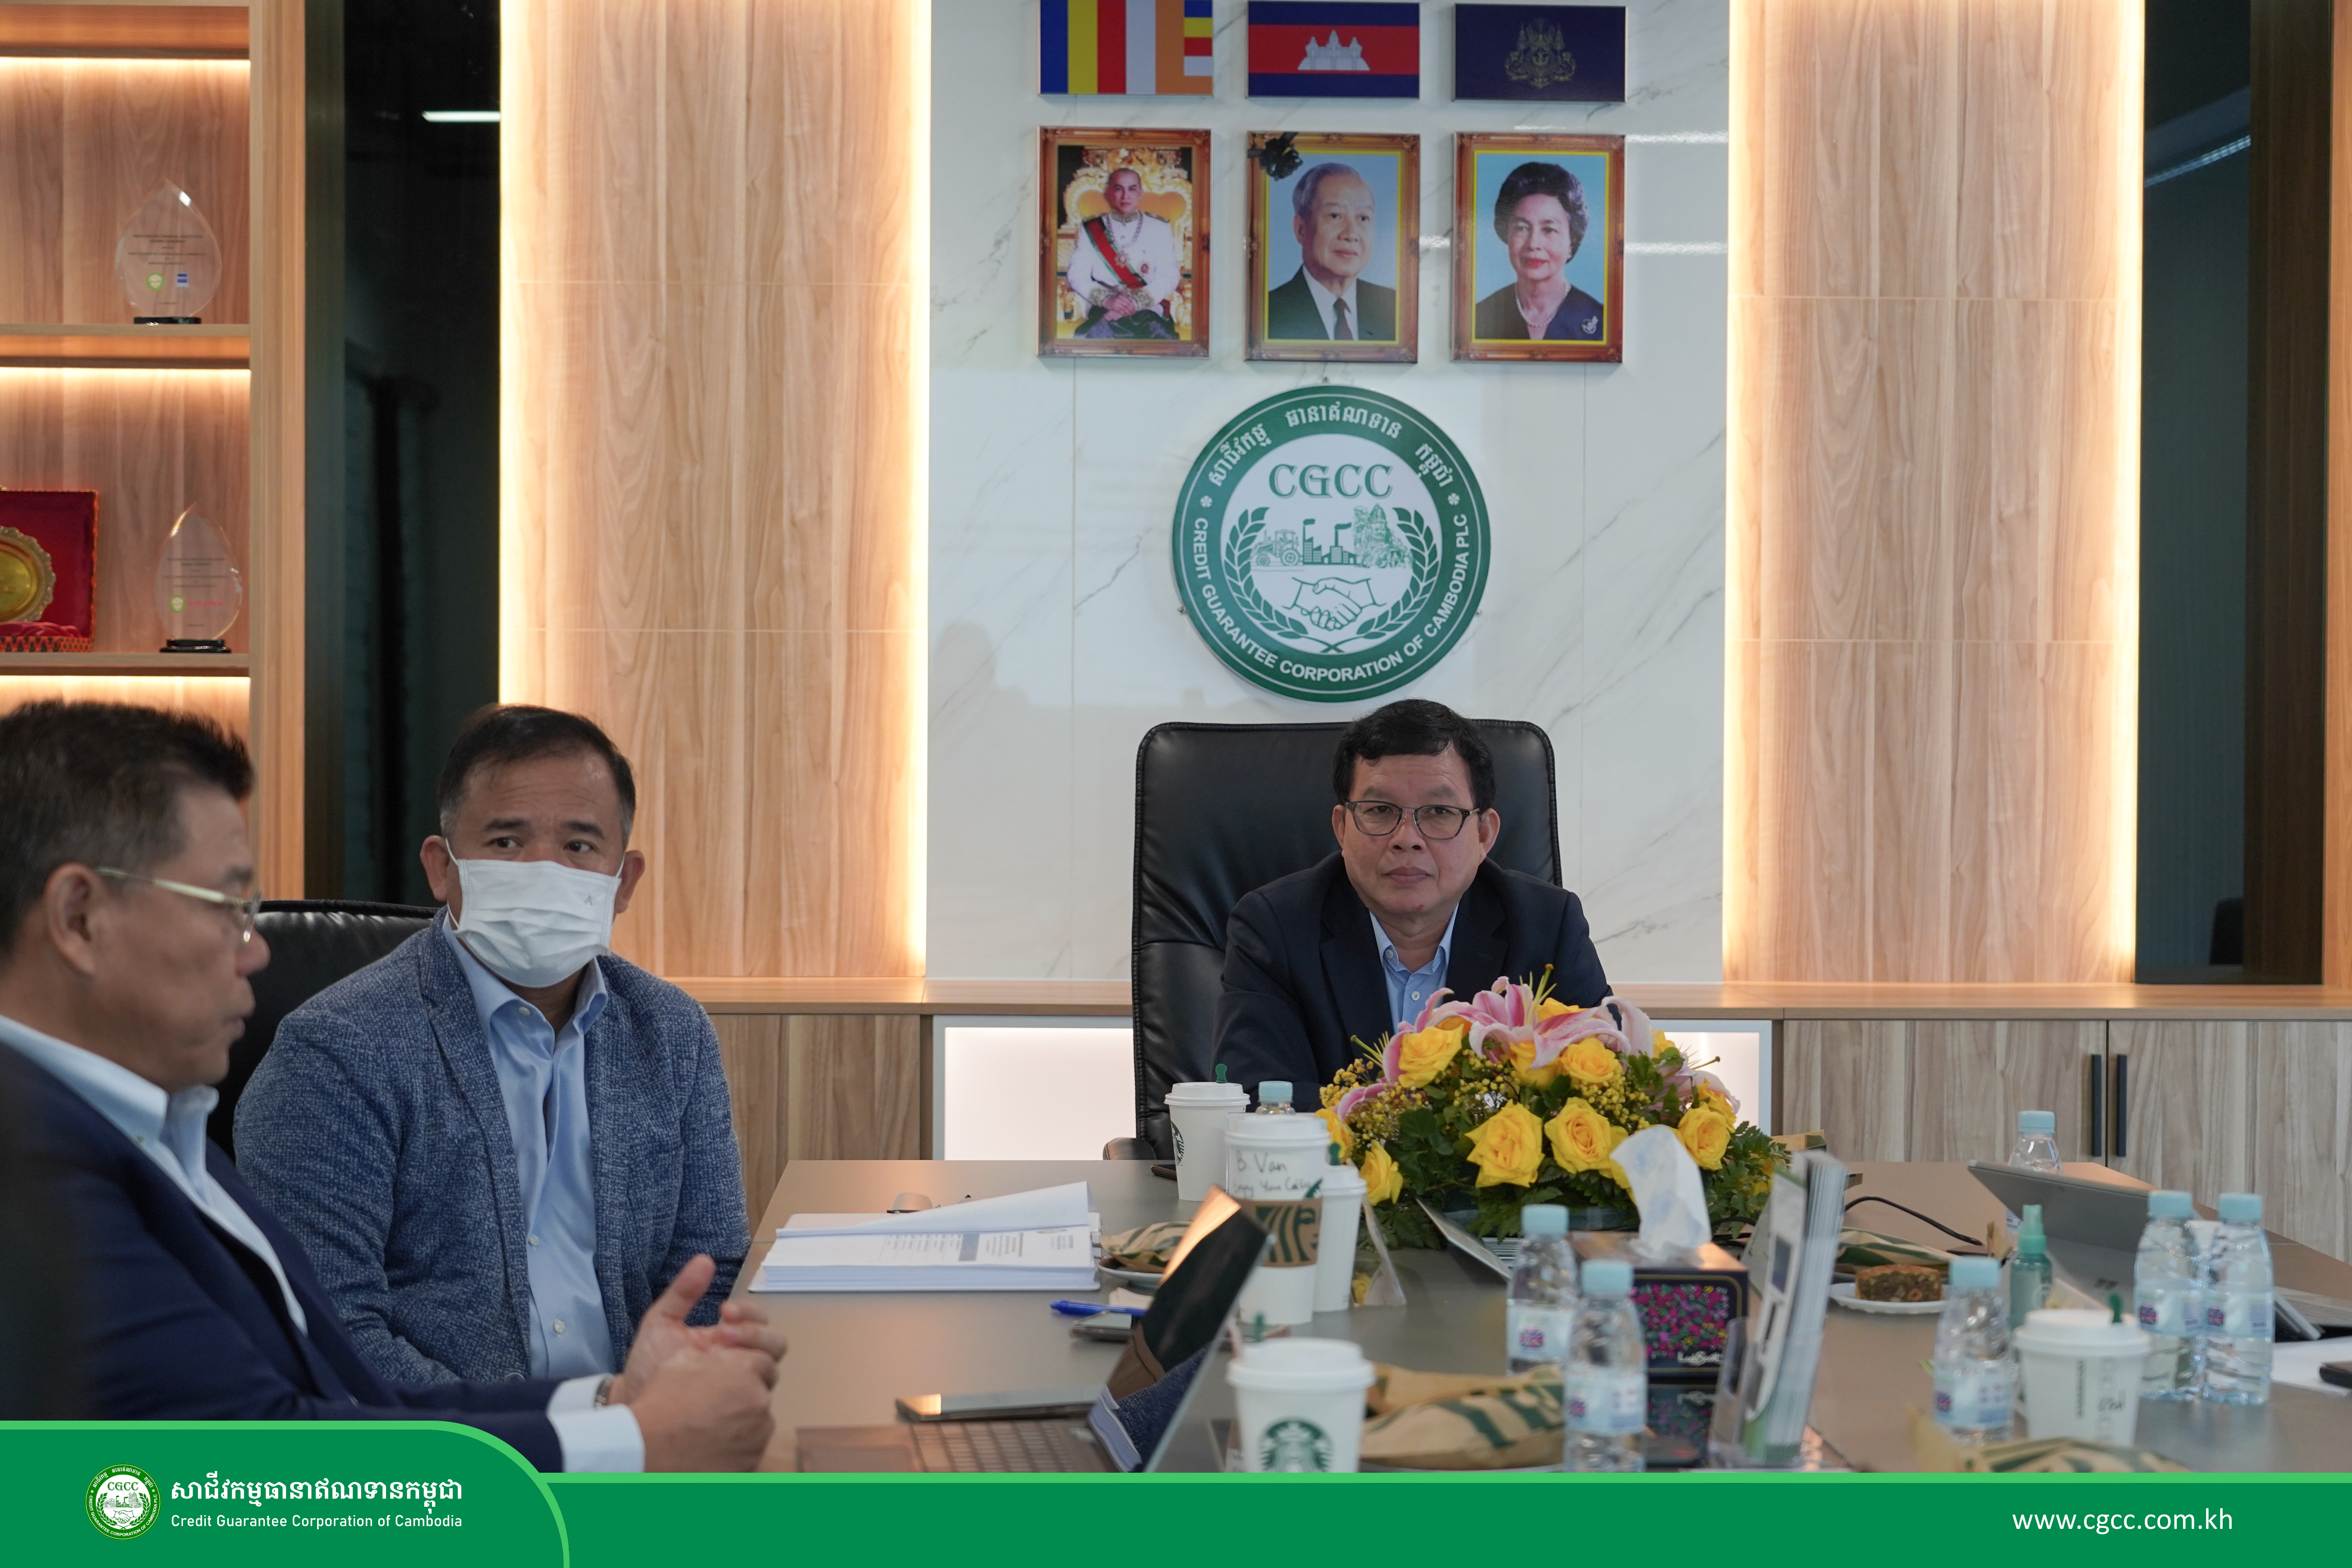 11th Board of Directors Meeting of Credit Guarantee Corporation of Cambodia (CGCC)